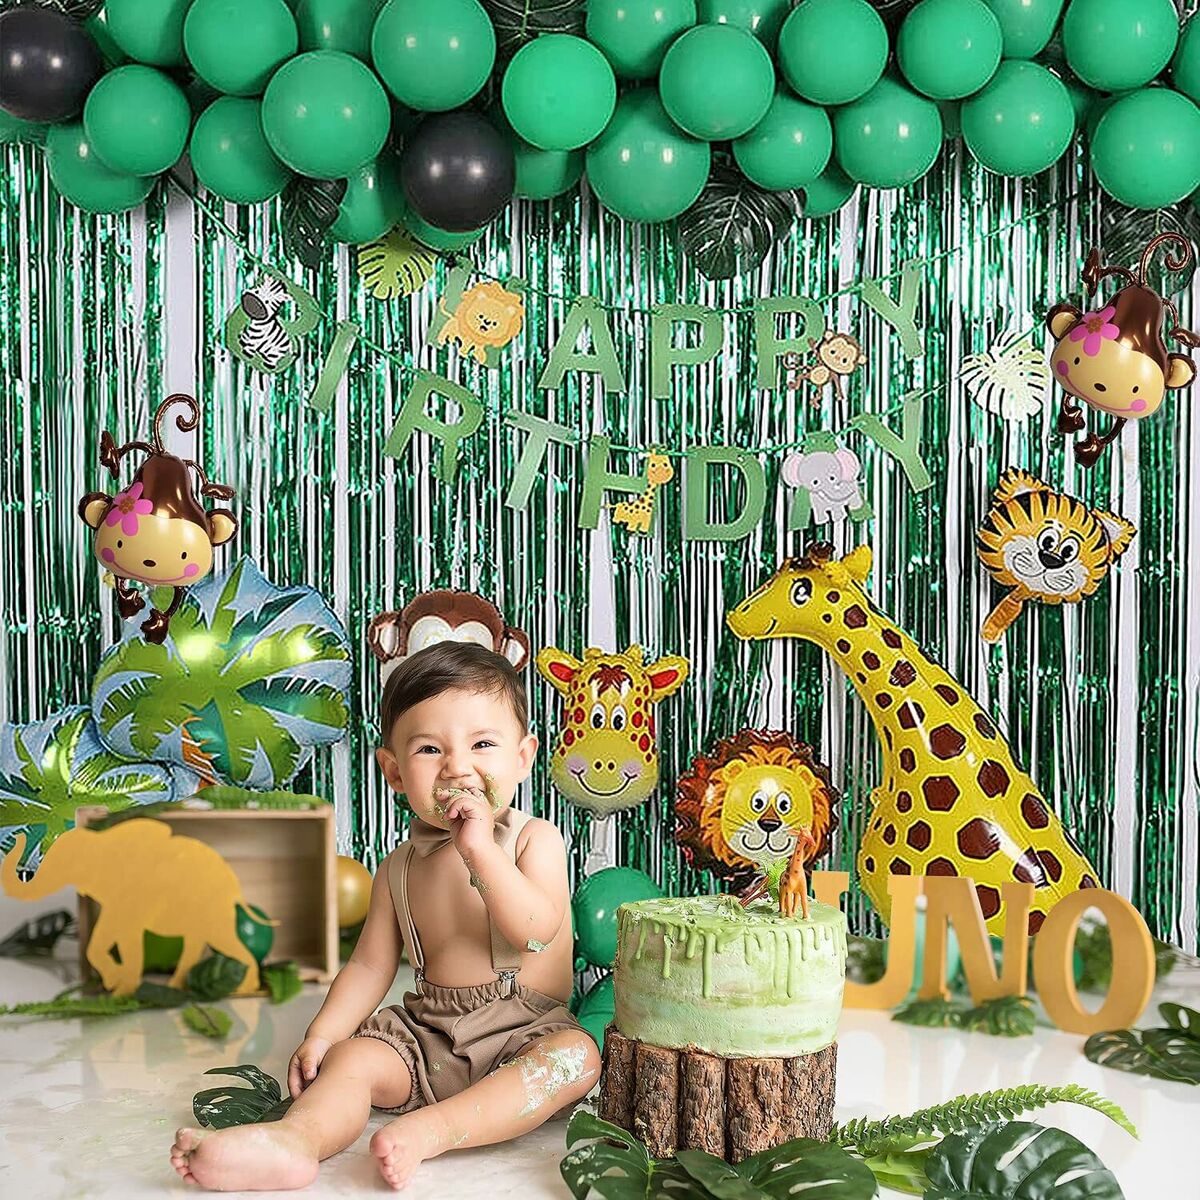 Jungle Theme Party Decoration 72Pcs For Boys Girls Jungle Theme Birthday  Party U